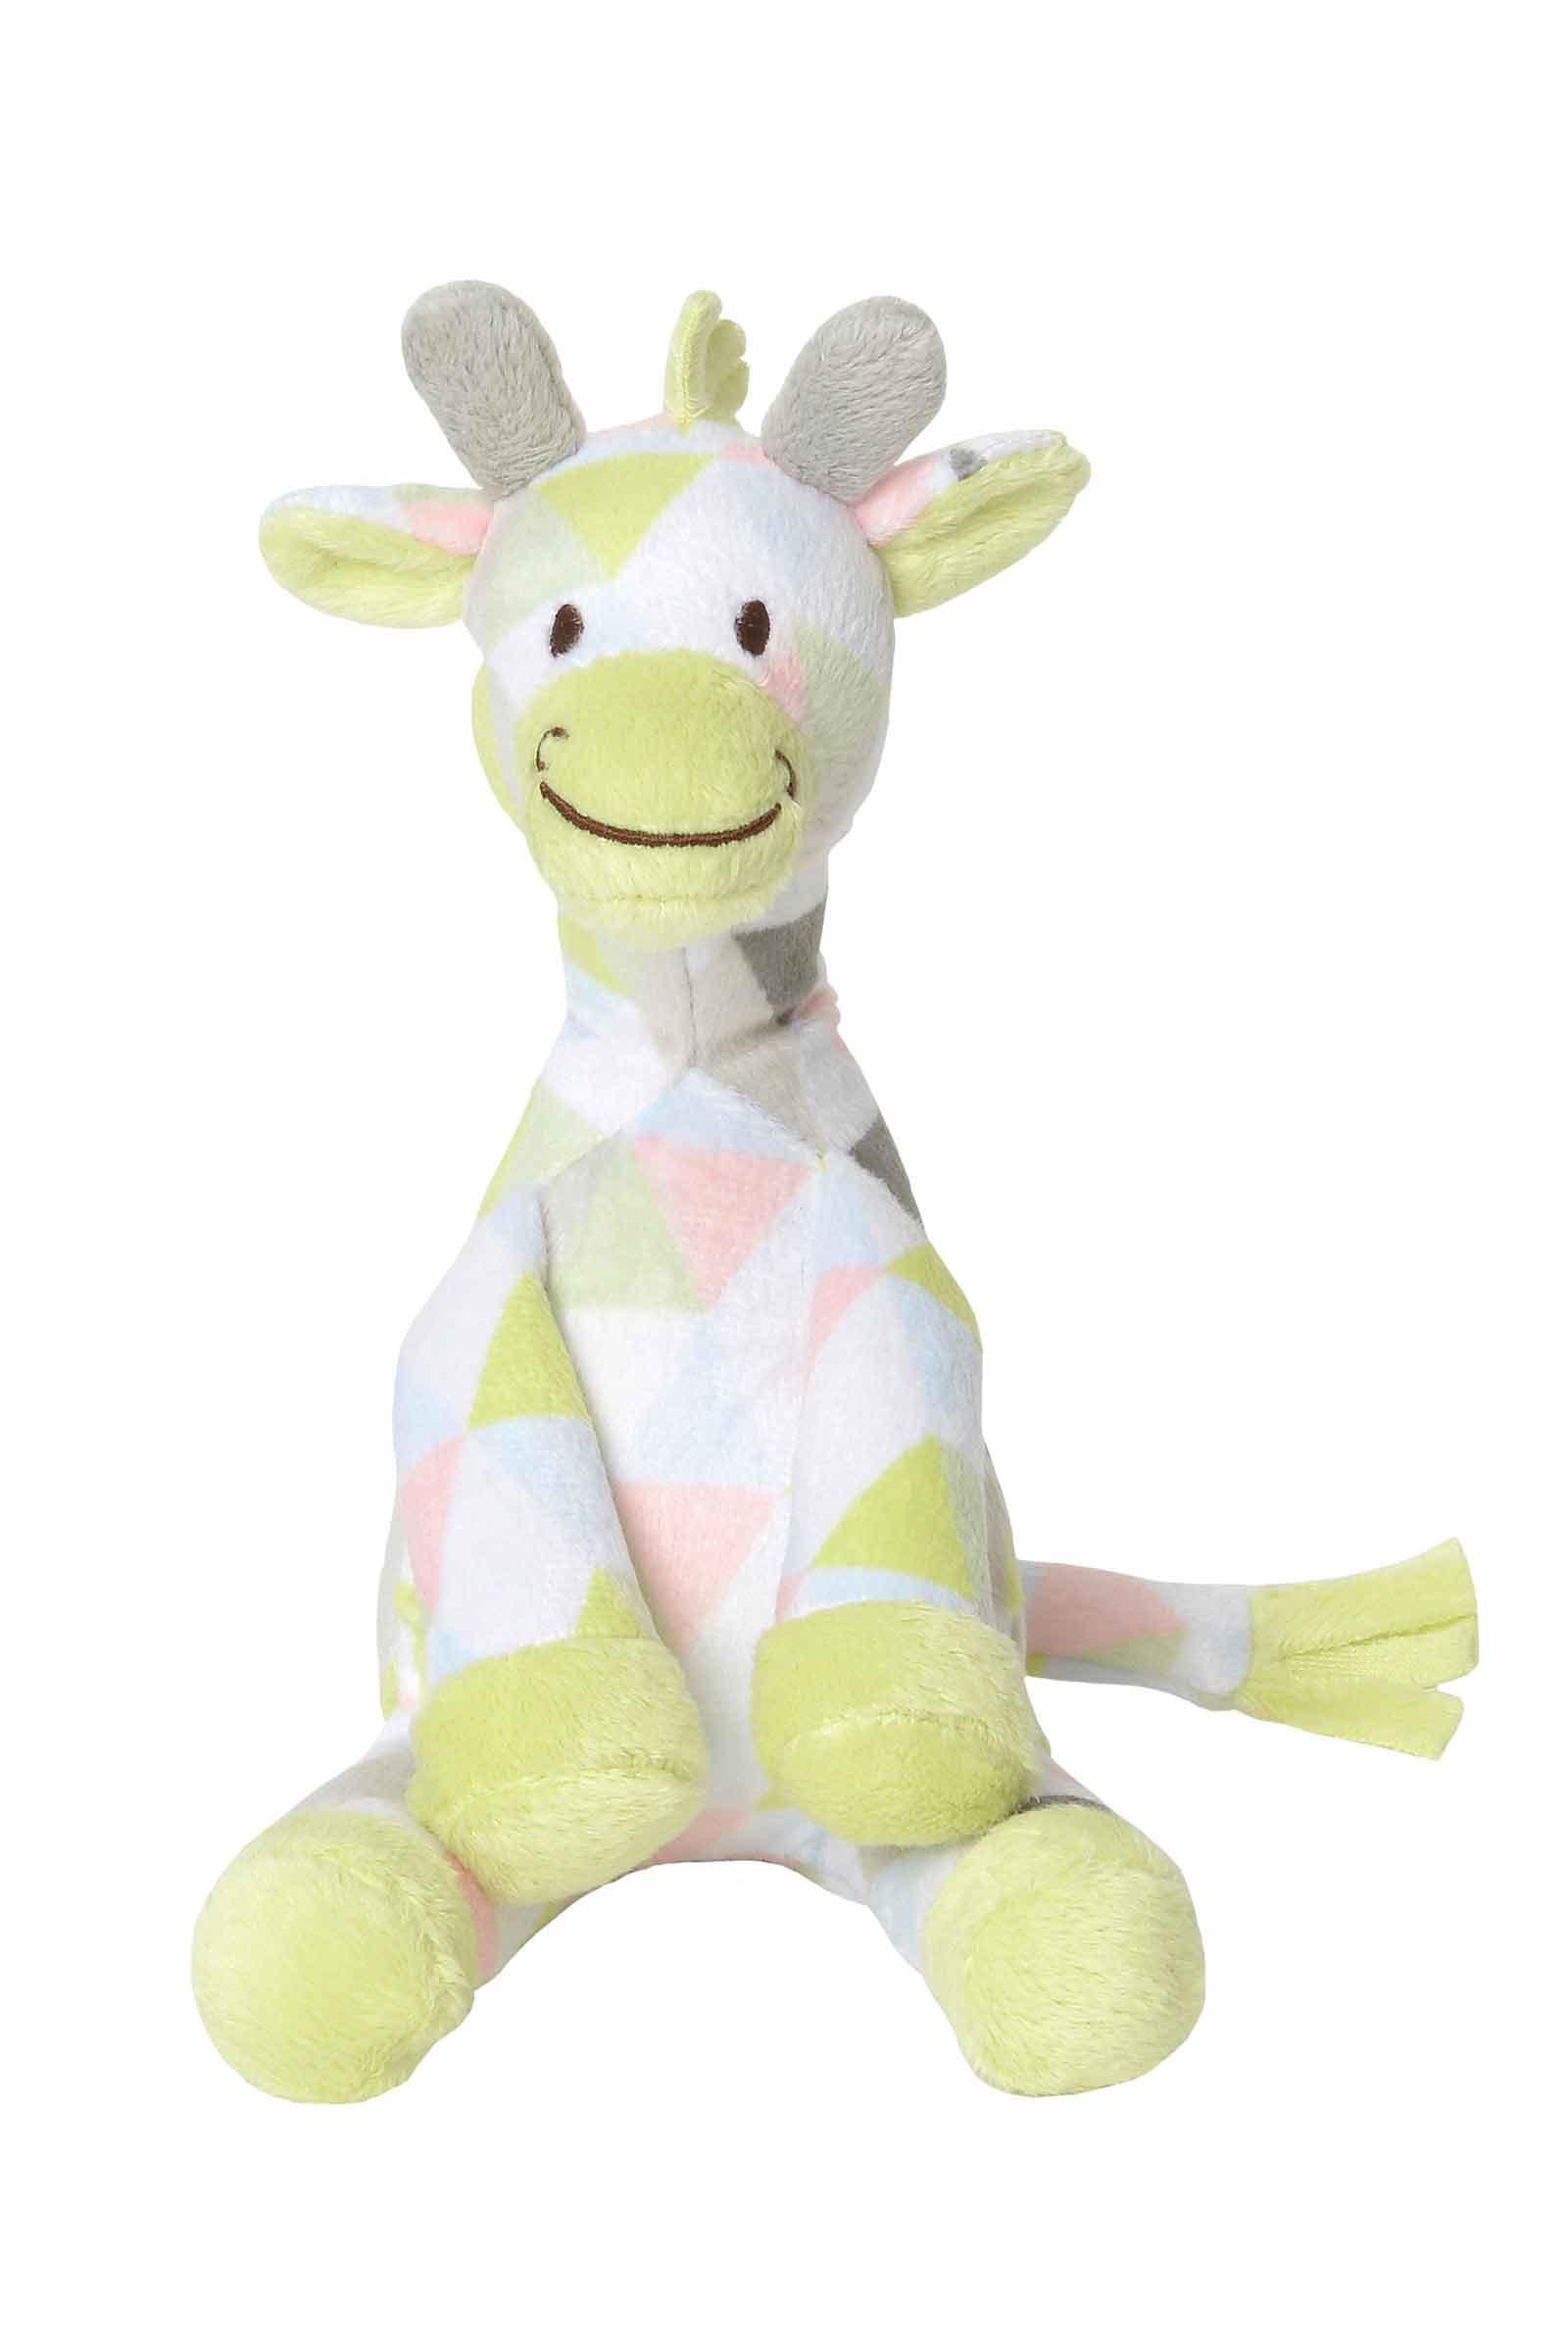 Entertainment afwijzing Versterker Happy Horse giraffe knuffel Georgy 20 cm - Babystraatje.nl